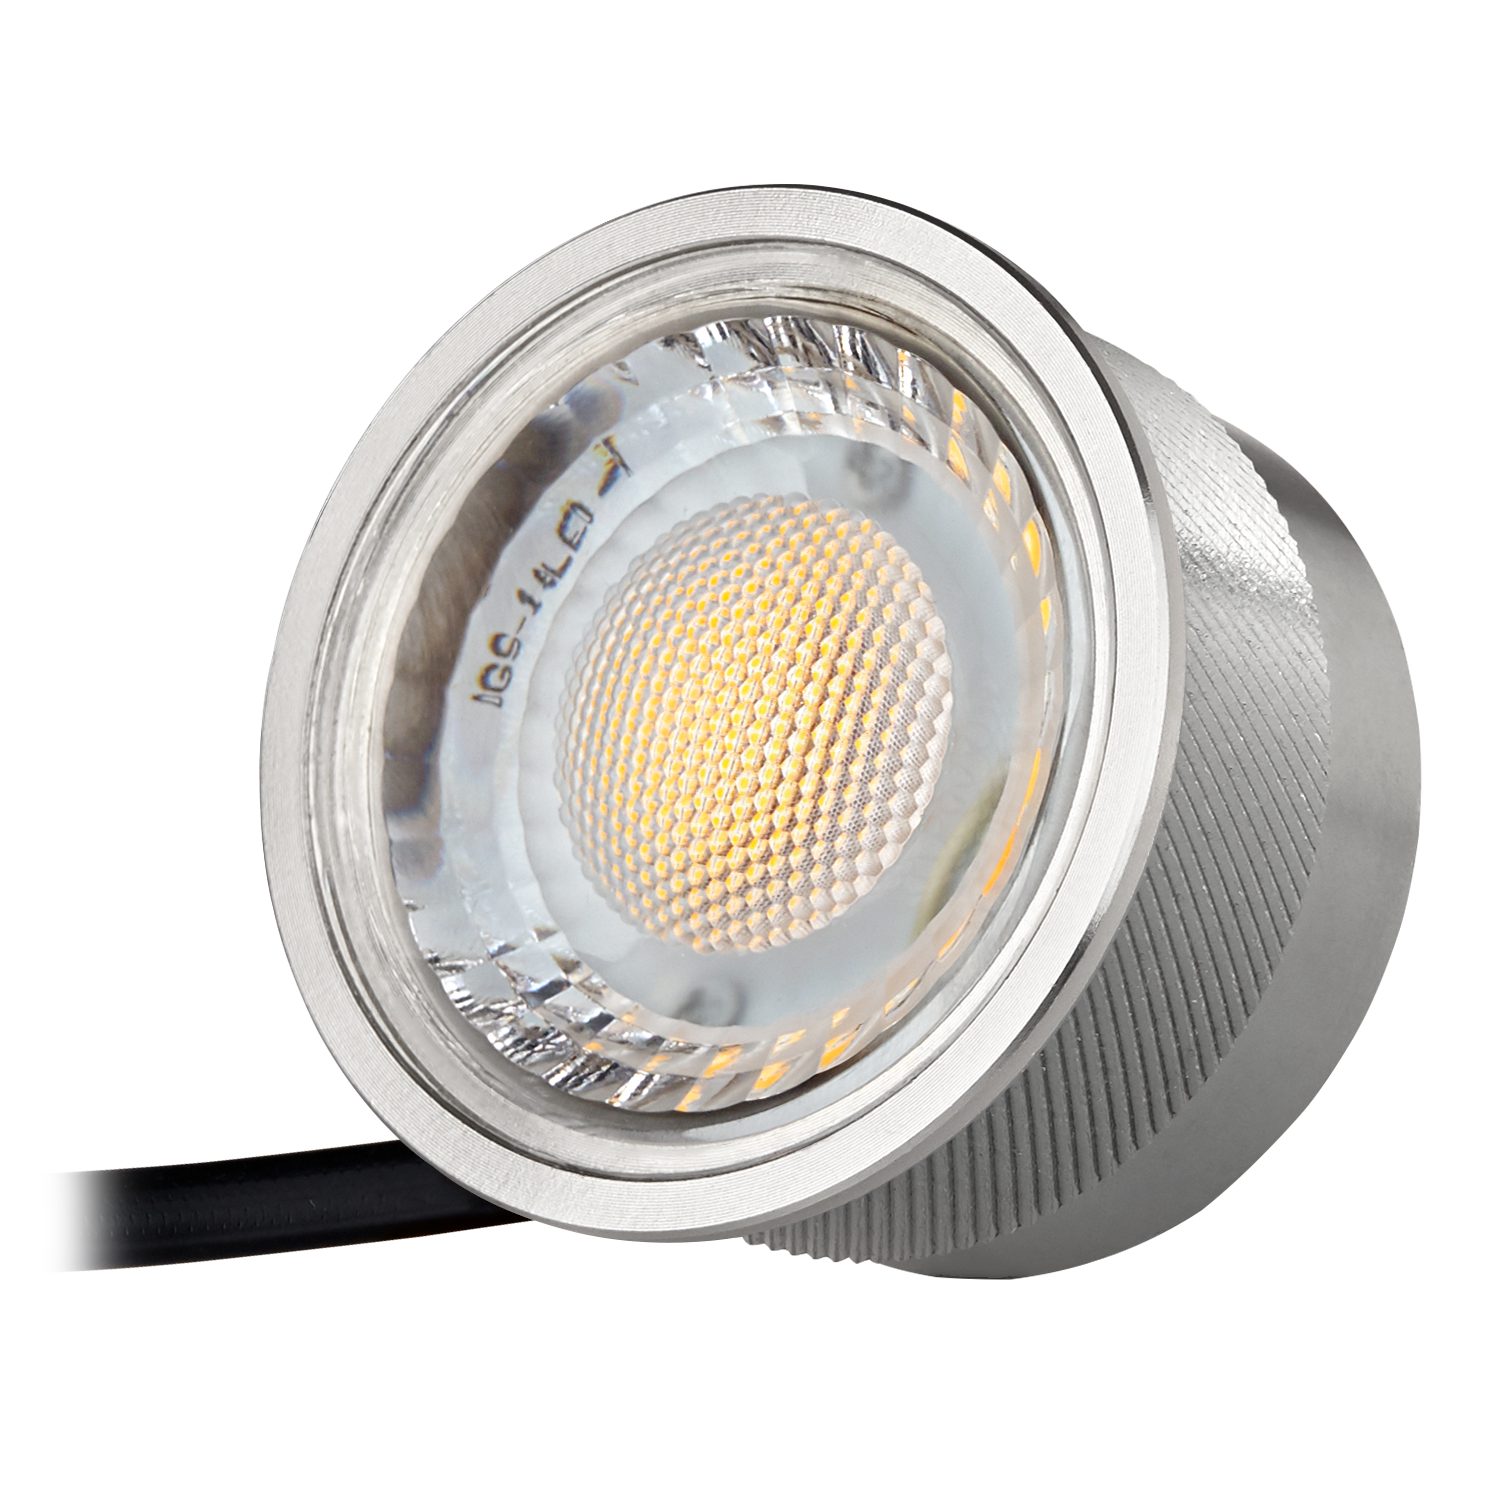 LEDANDO LED Einbaustrahler 5W flach 3er LED mit extra in schwarz LEDAN LED Einbaustrahler Set von